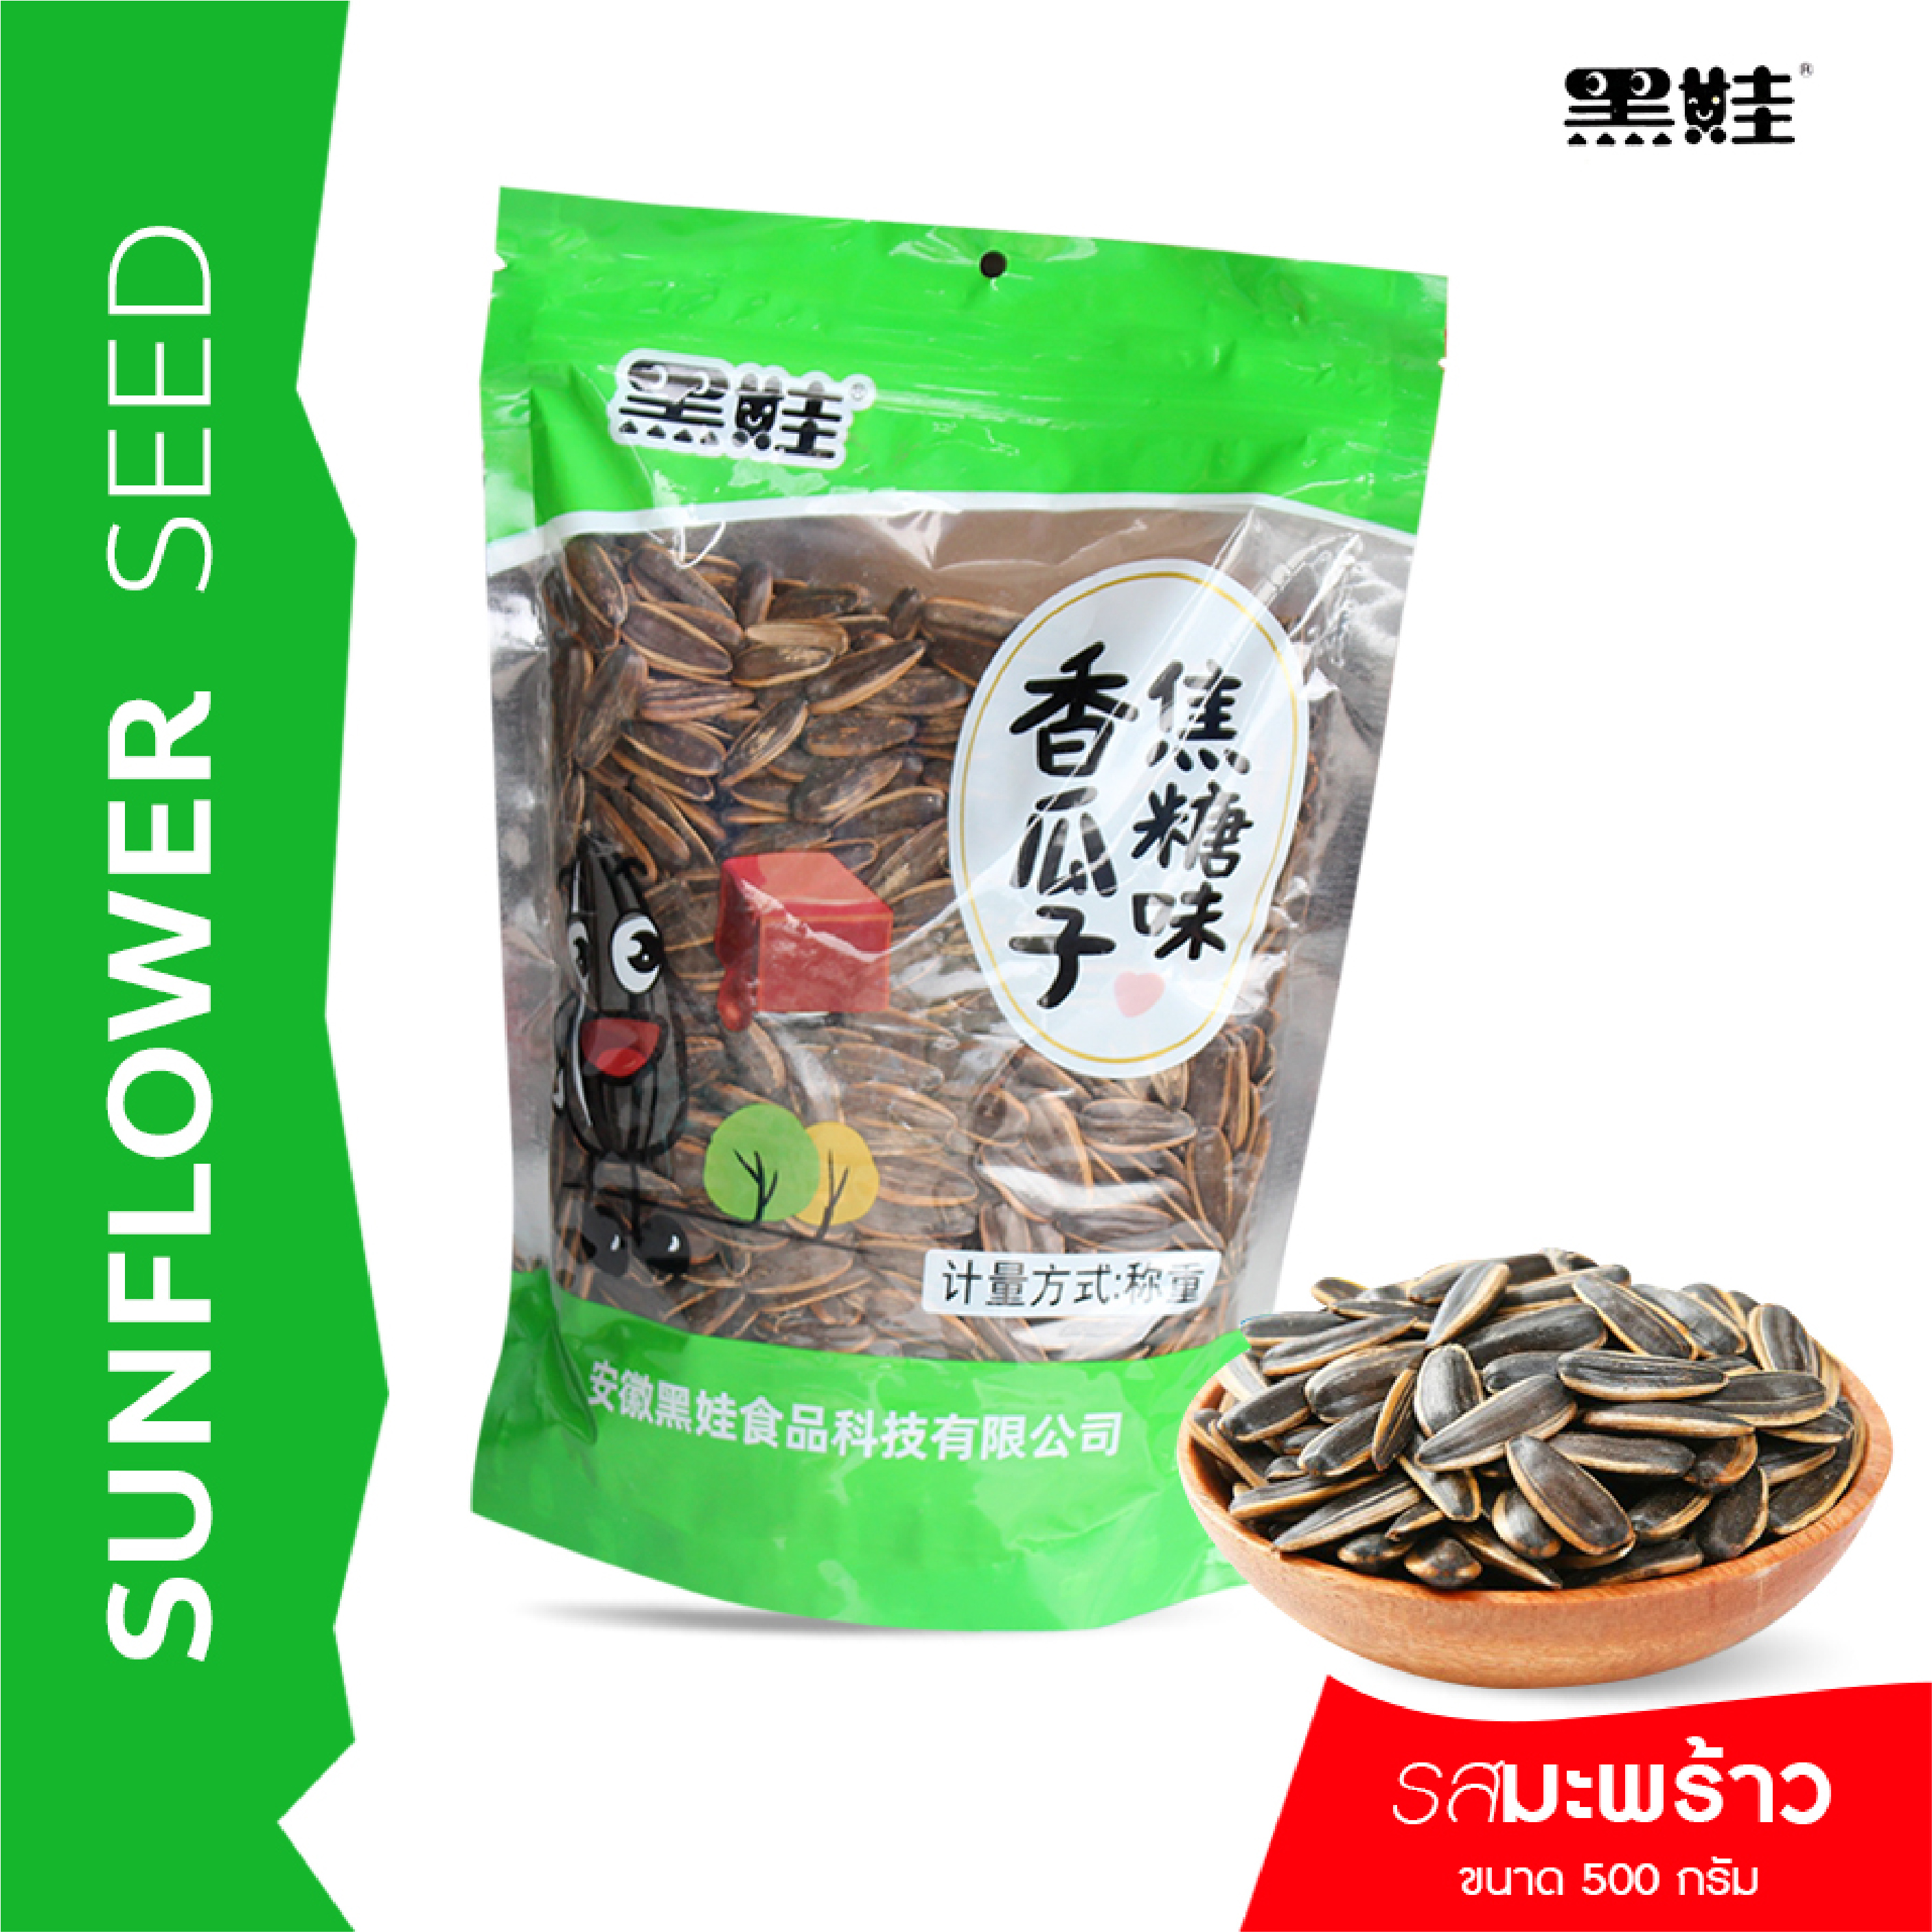 HEIWA Sunflower Seed : เมล็ดทานตะวัน ขนาด 500 กรัม ไฉไล อินเตอร์เทรด บริษัทนำเข้าขนม